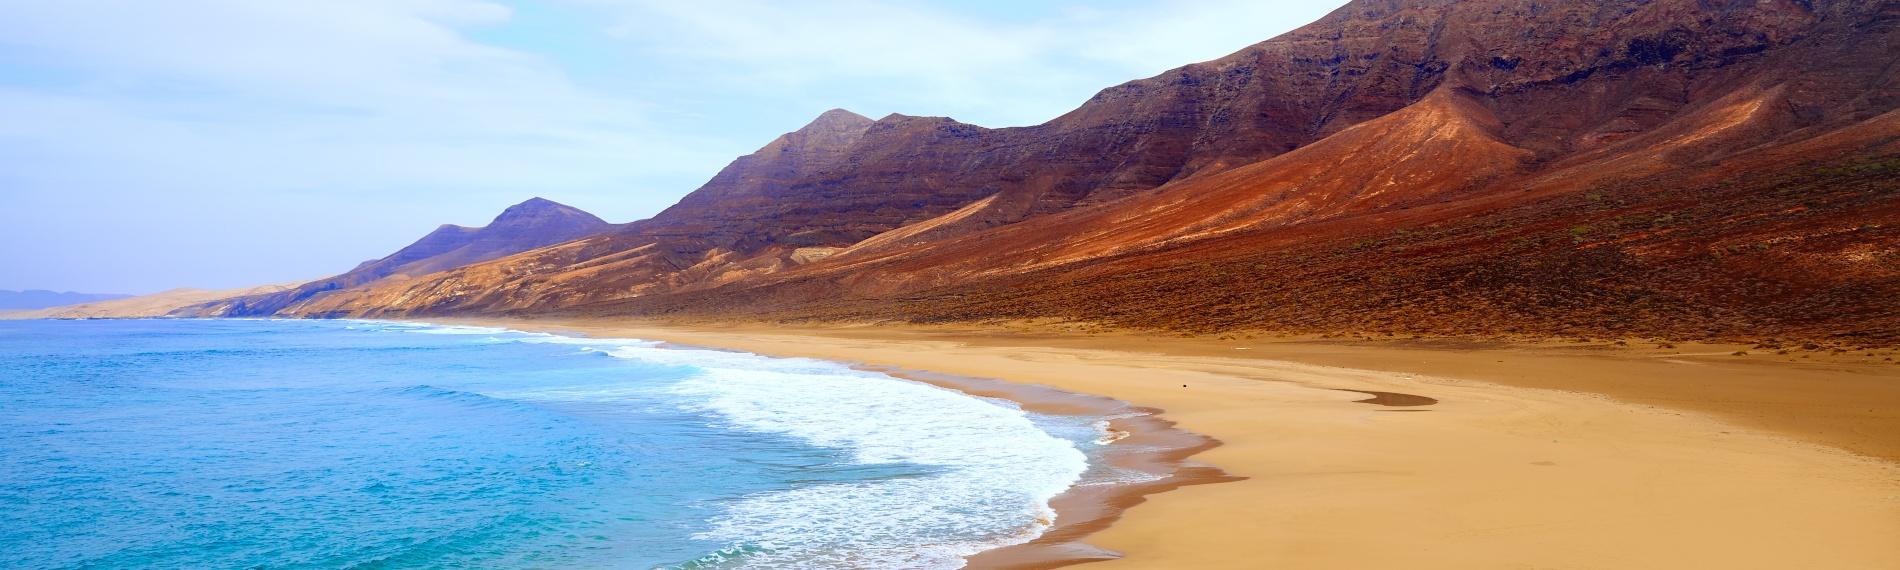 Untouched Cofete Beach in Fuerteventura